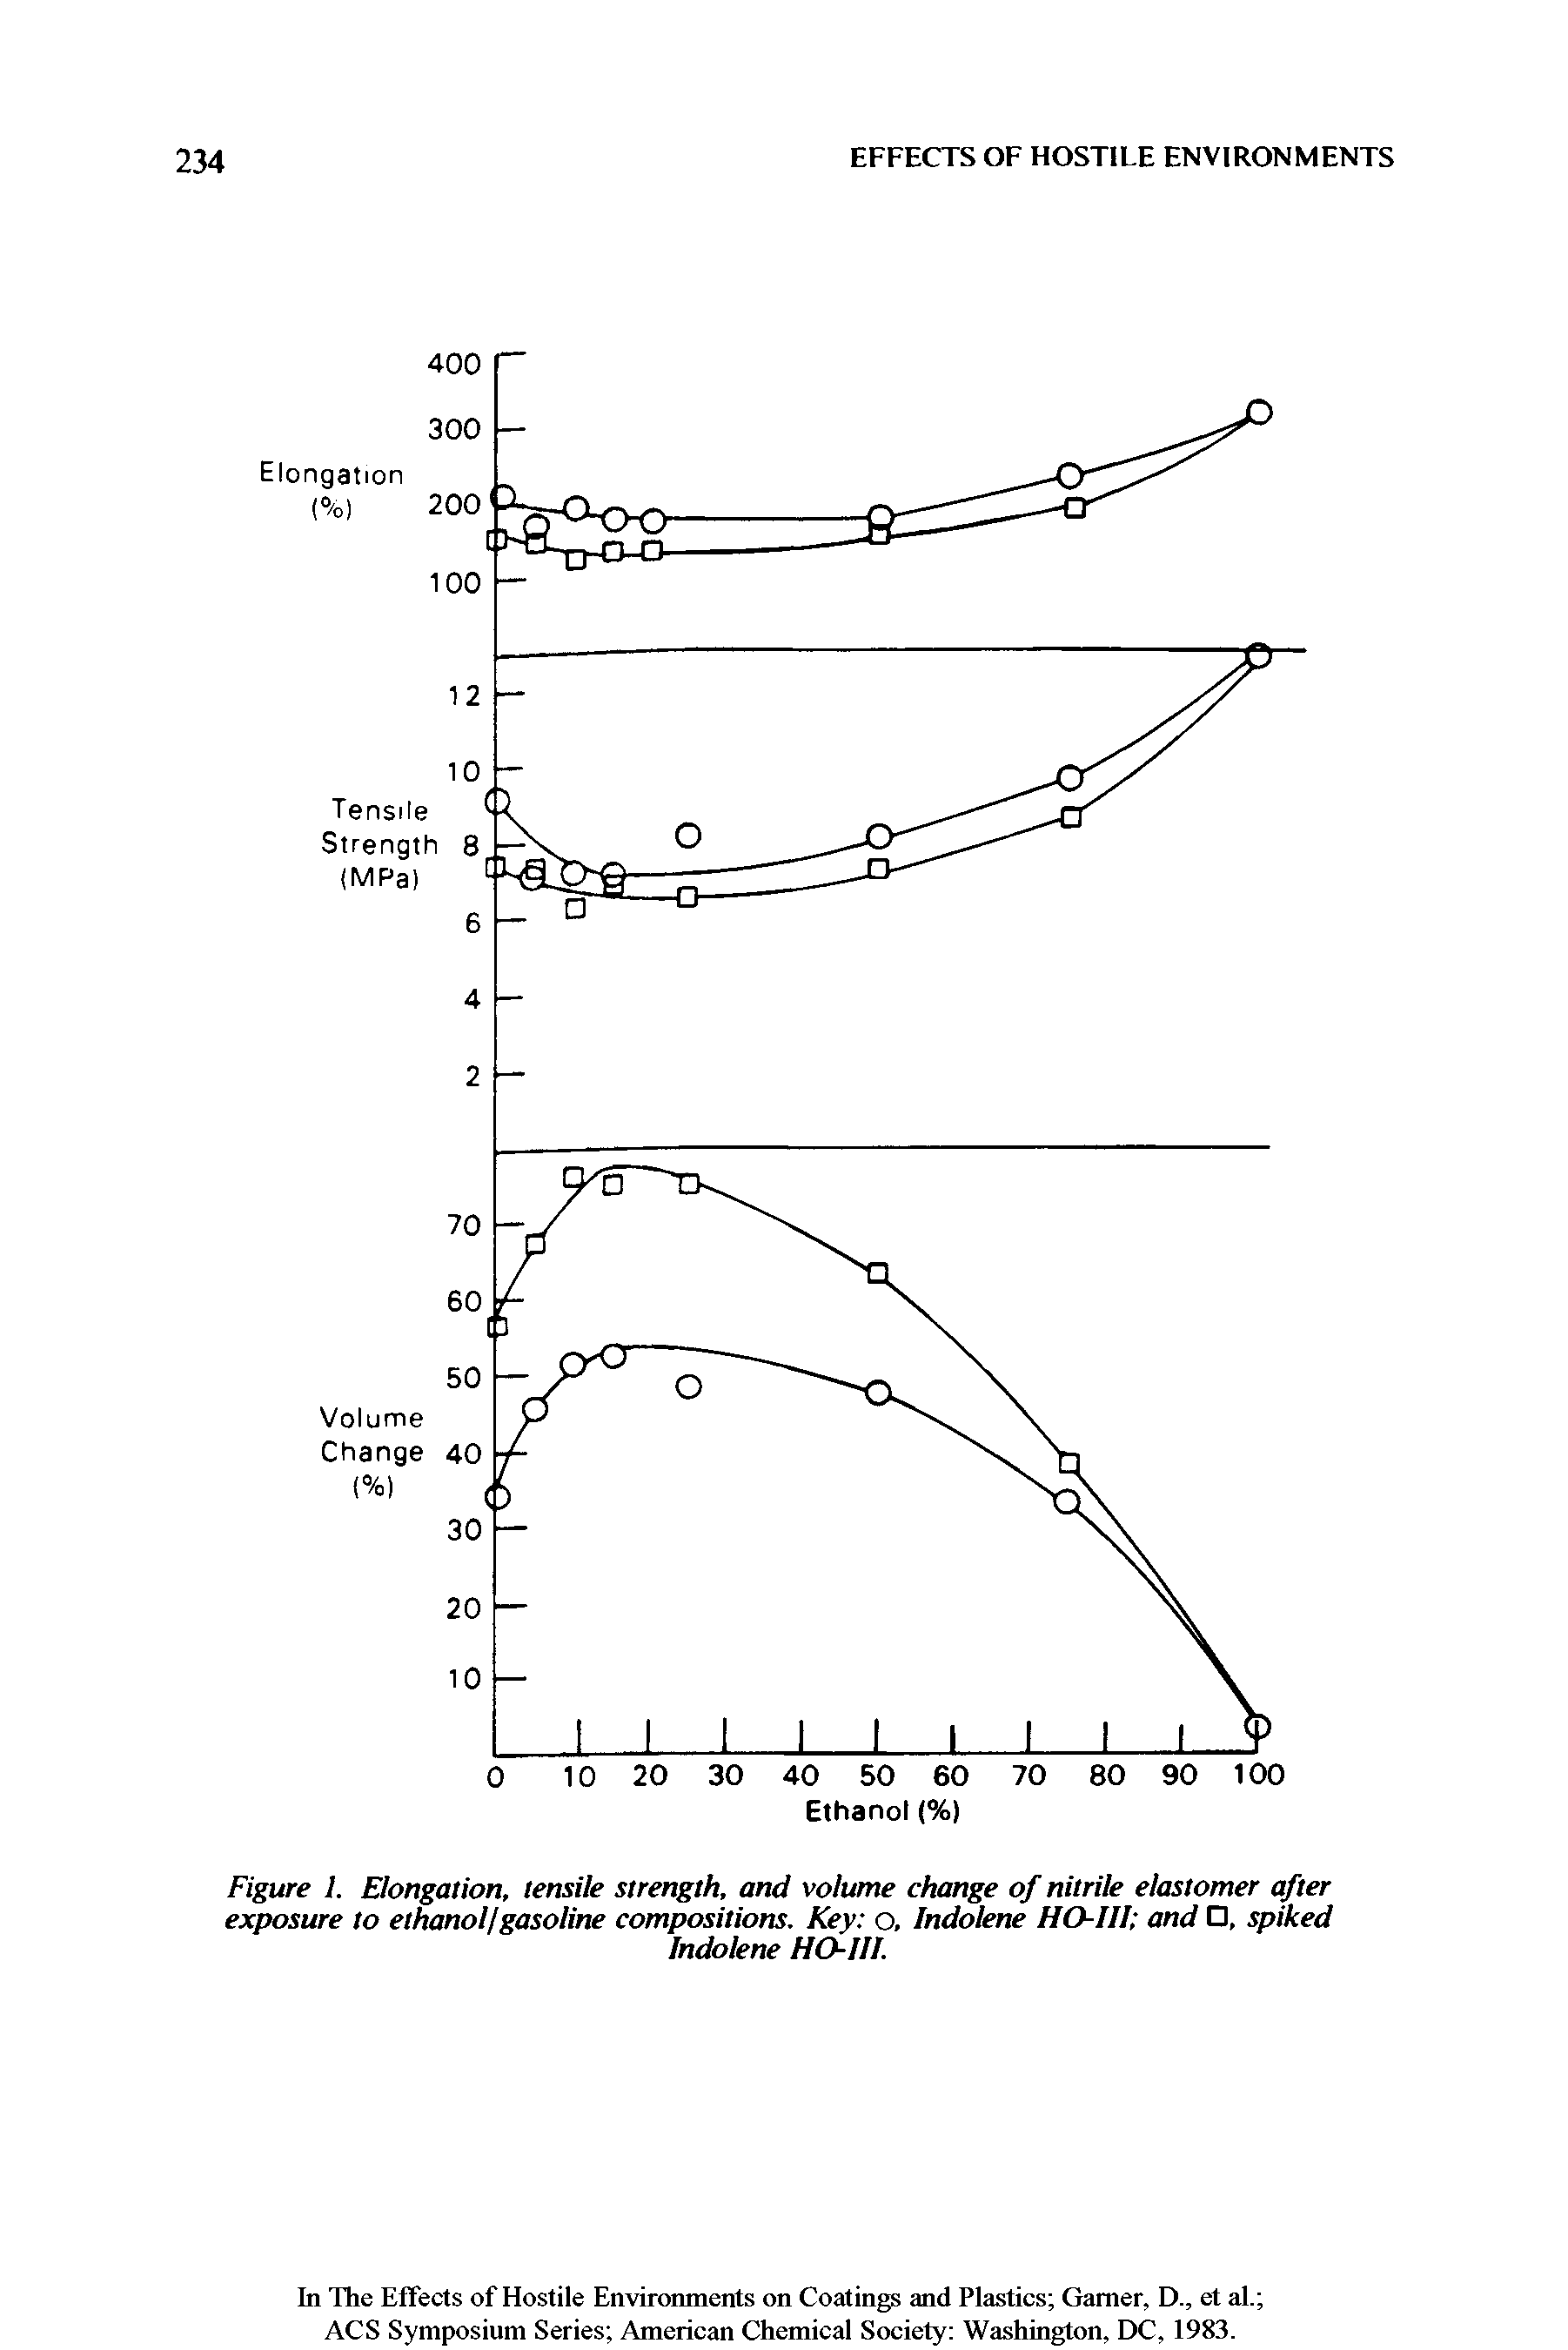 Figure I. Elongation, tensile strength, and volume change of nitrile elastomer after exposure to ethanol/gasoline compositions. Key o, Indolene HO-III and , spiked Indolene HO-III.